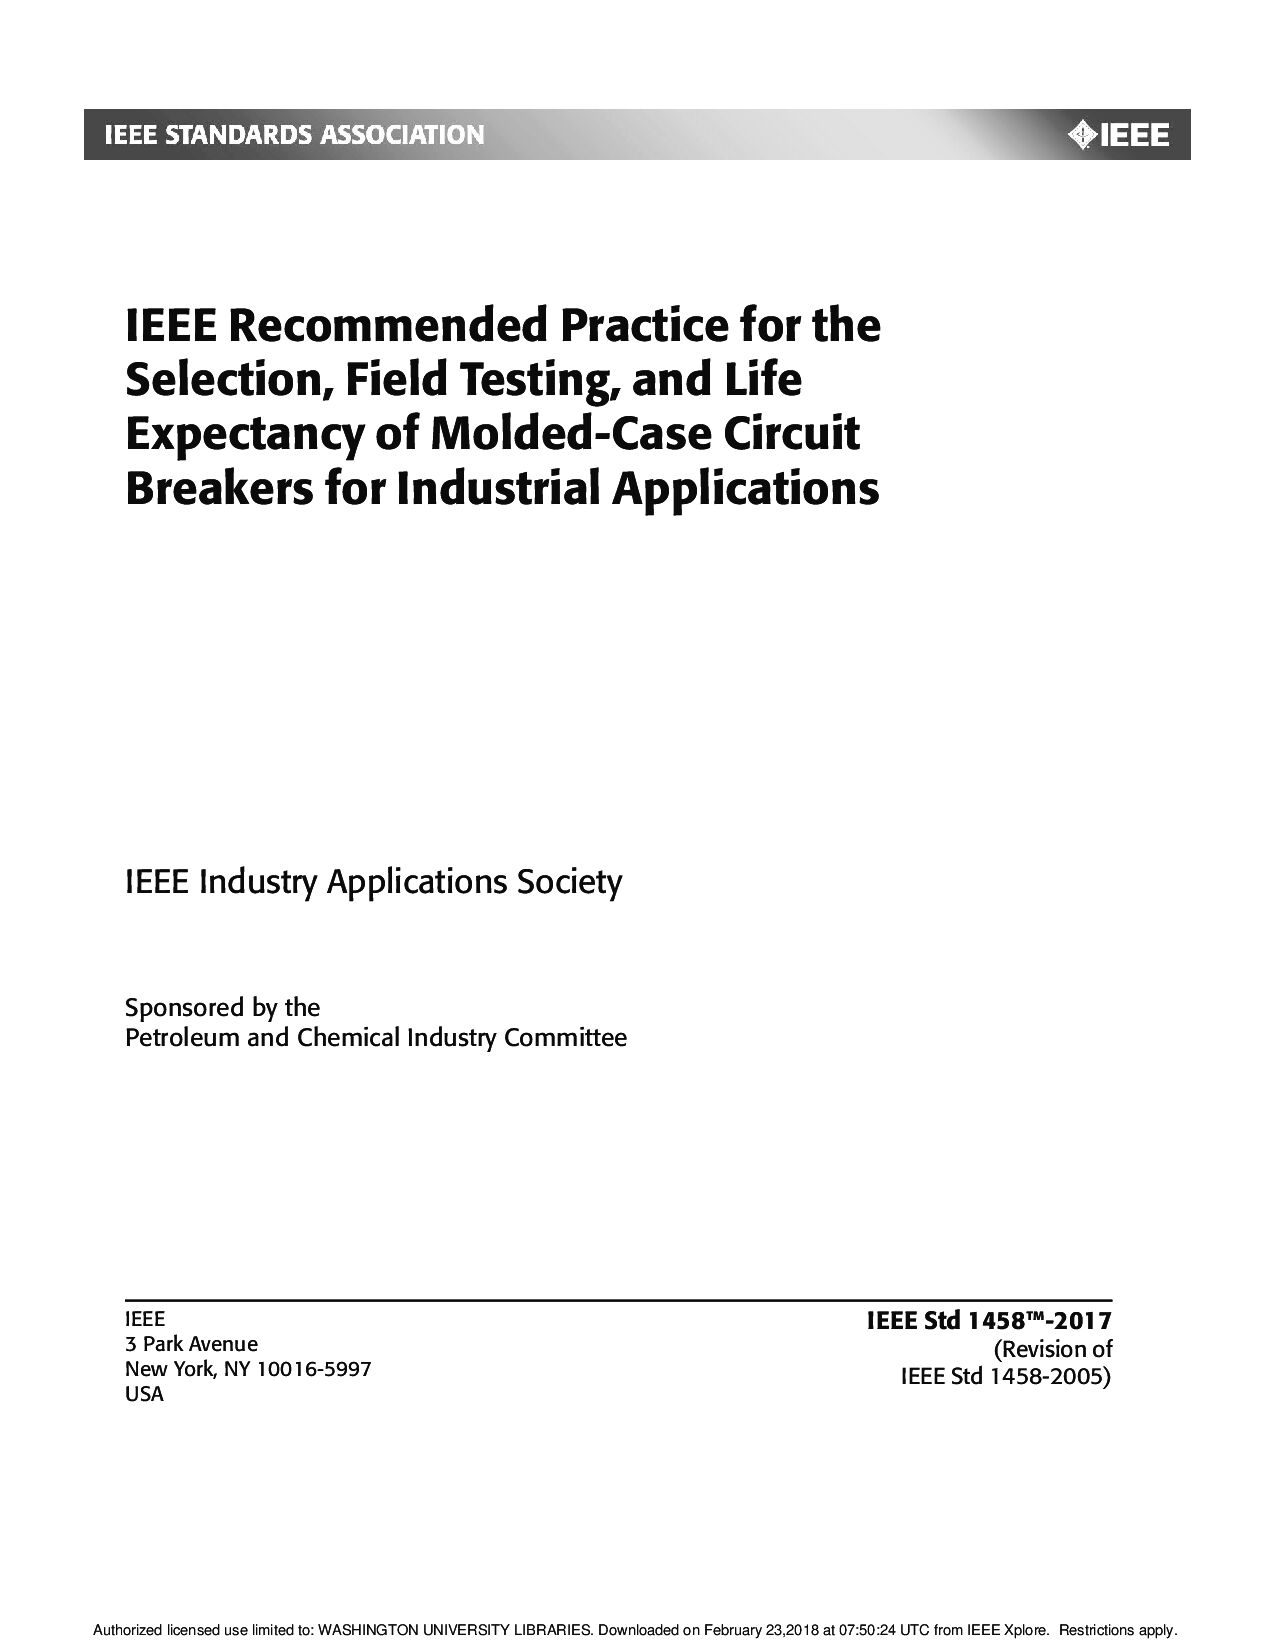 IEEE Std 1458-2017